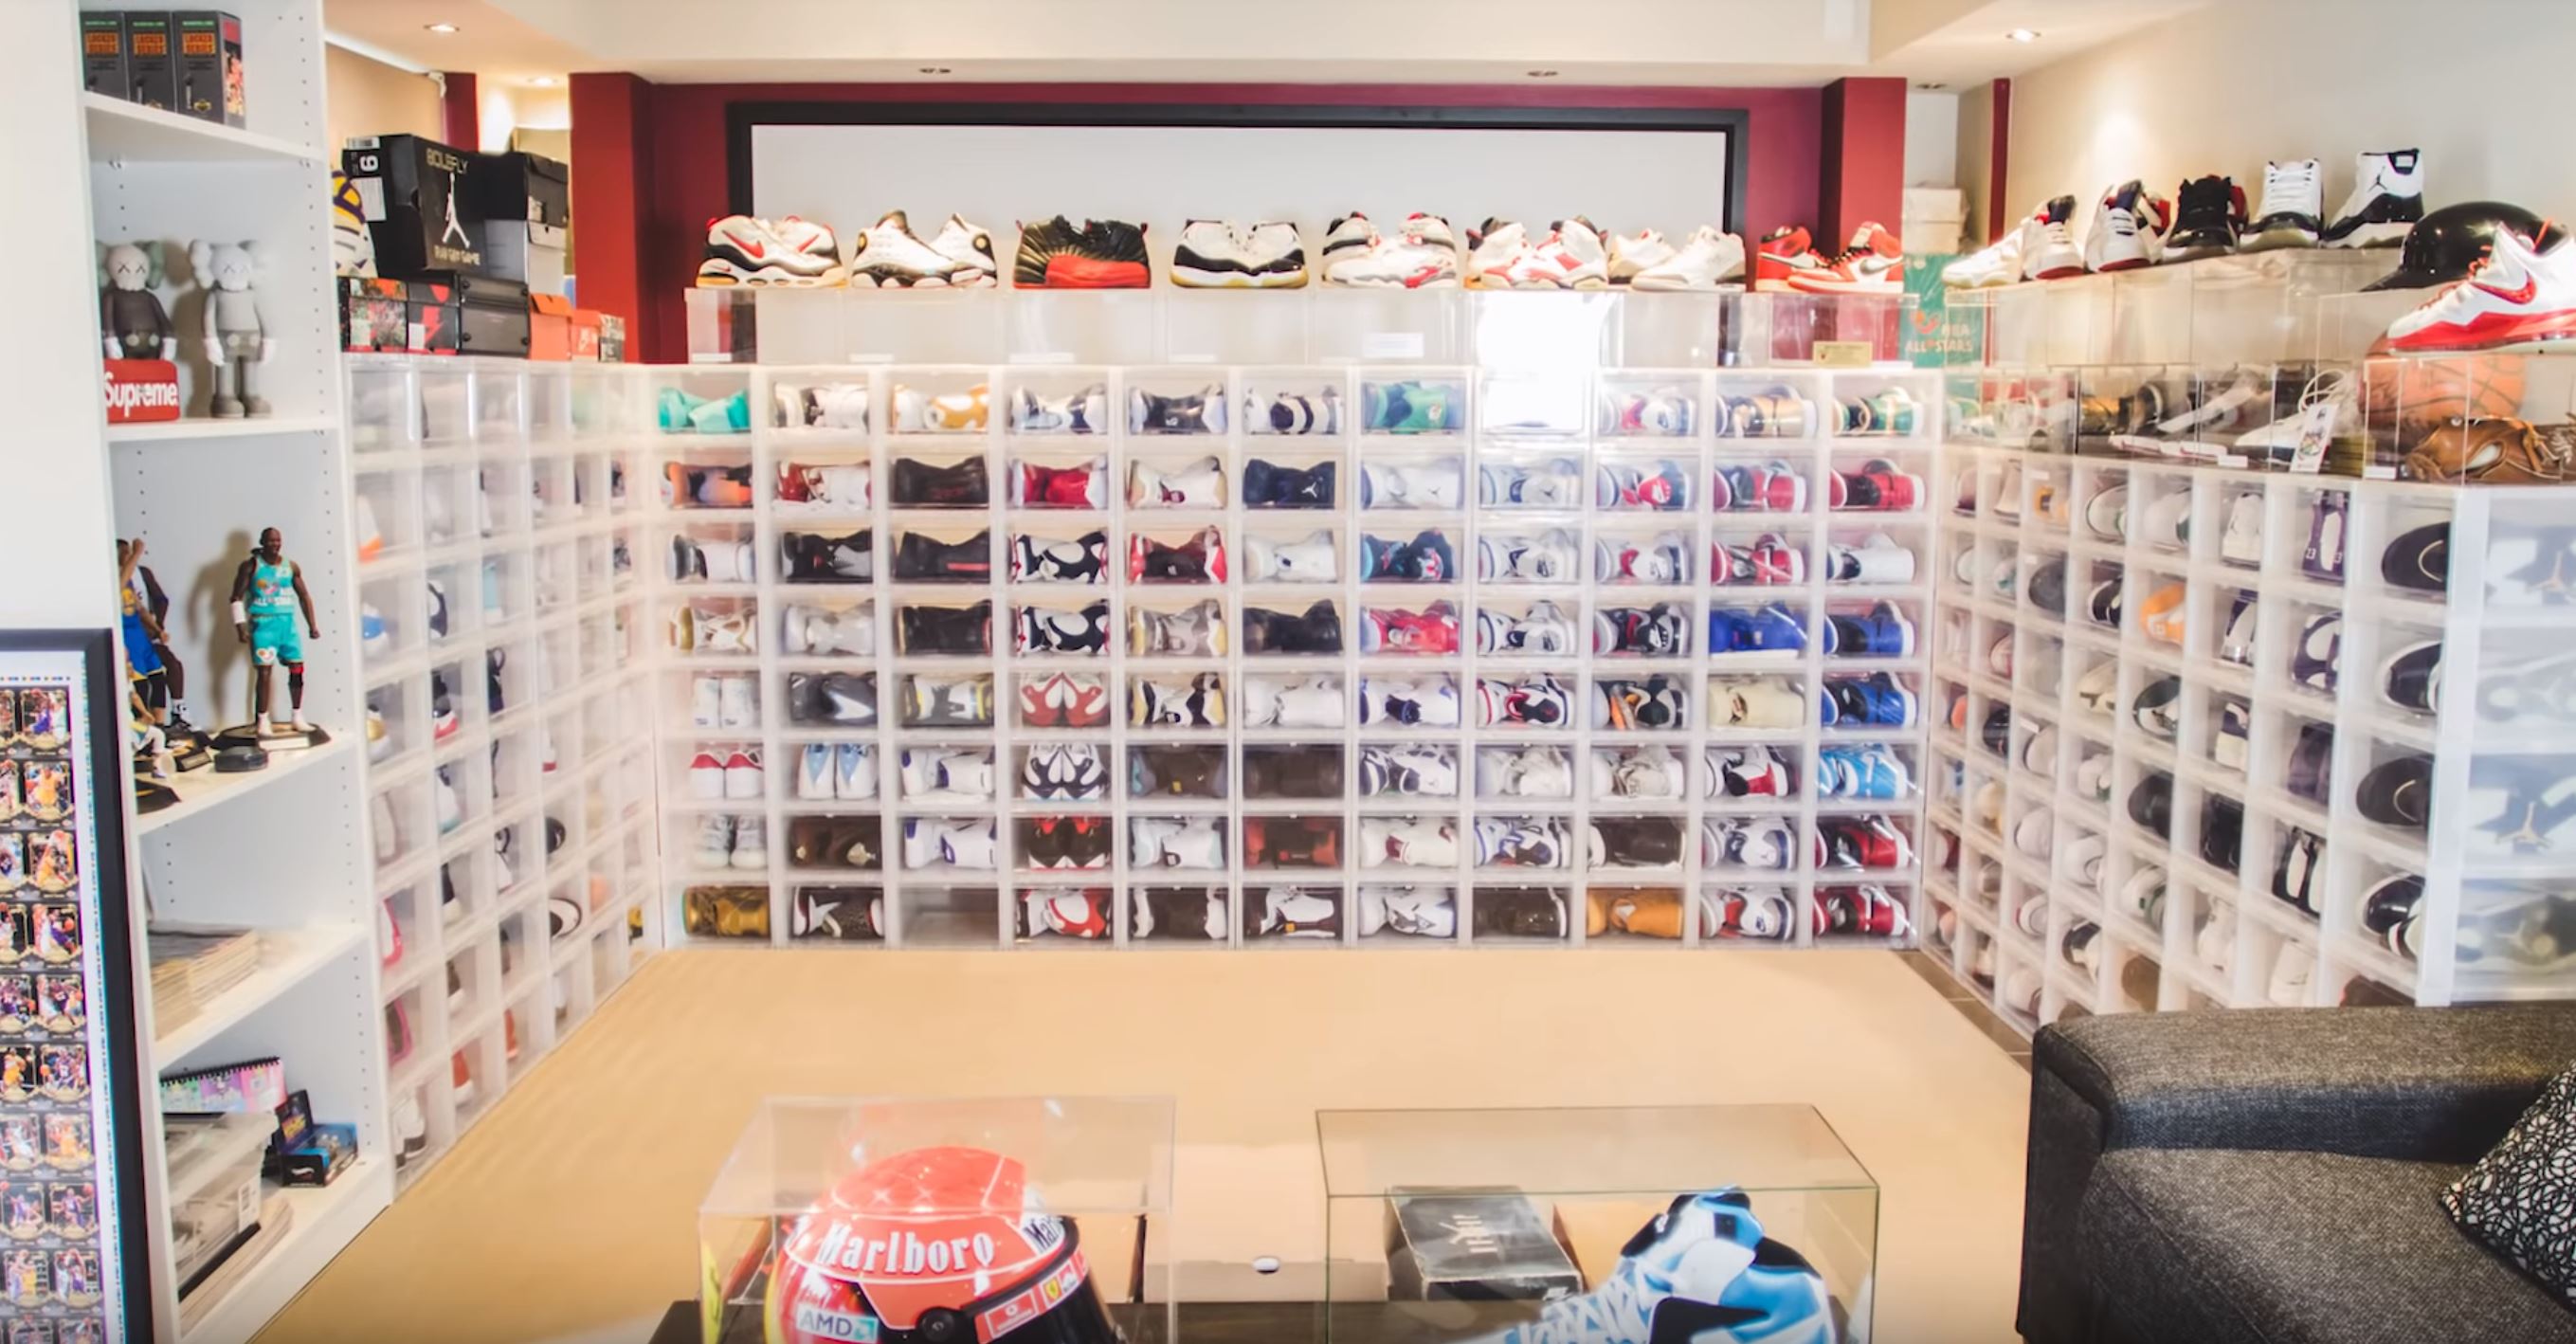 michael jordan sneaker collection